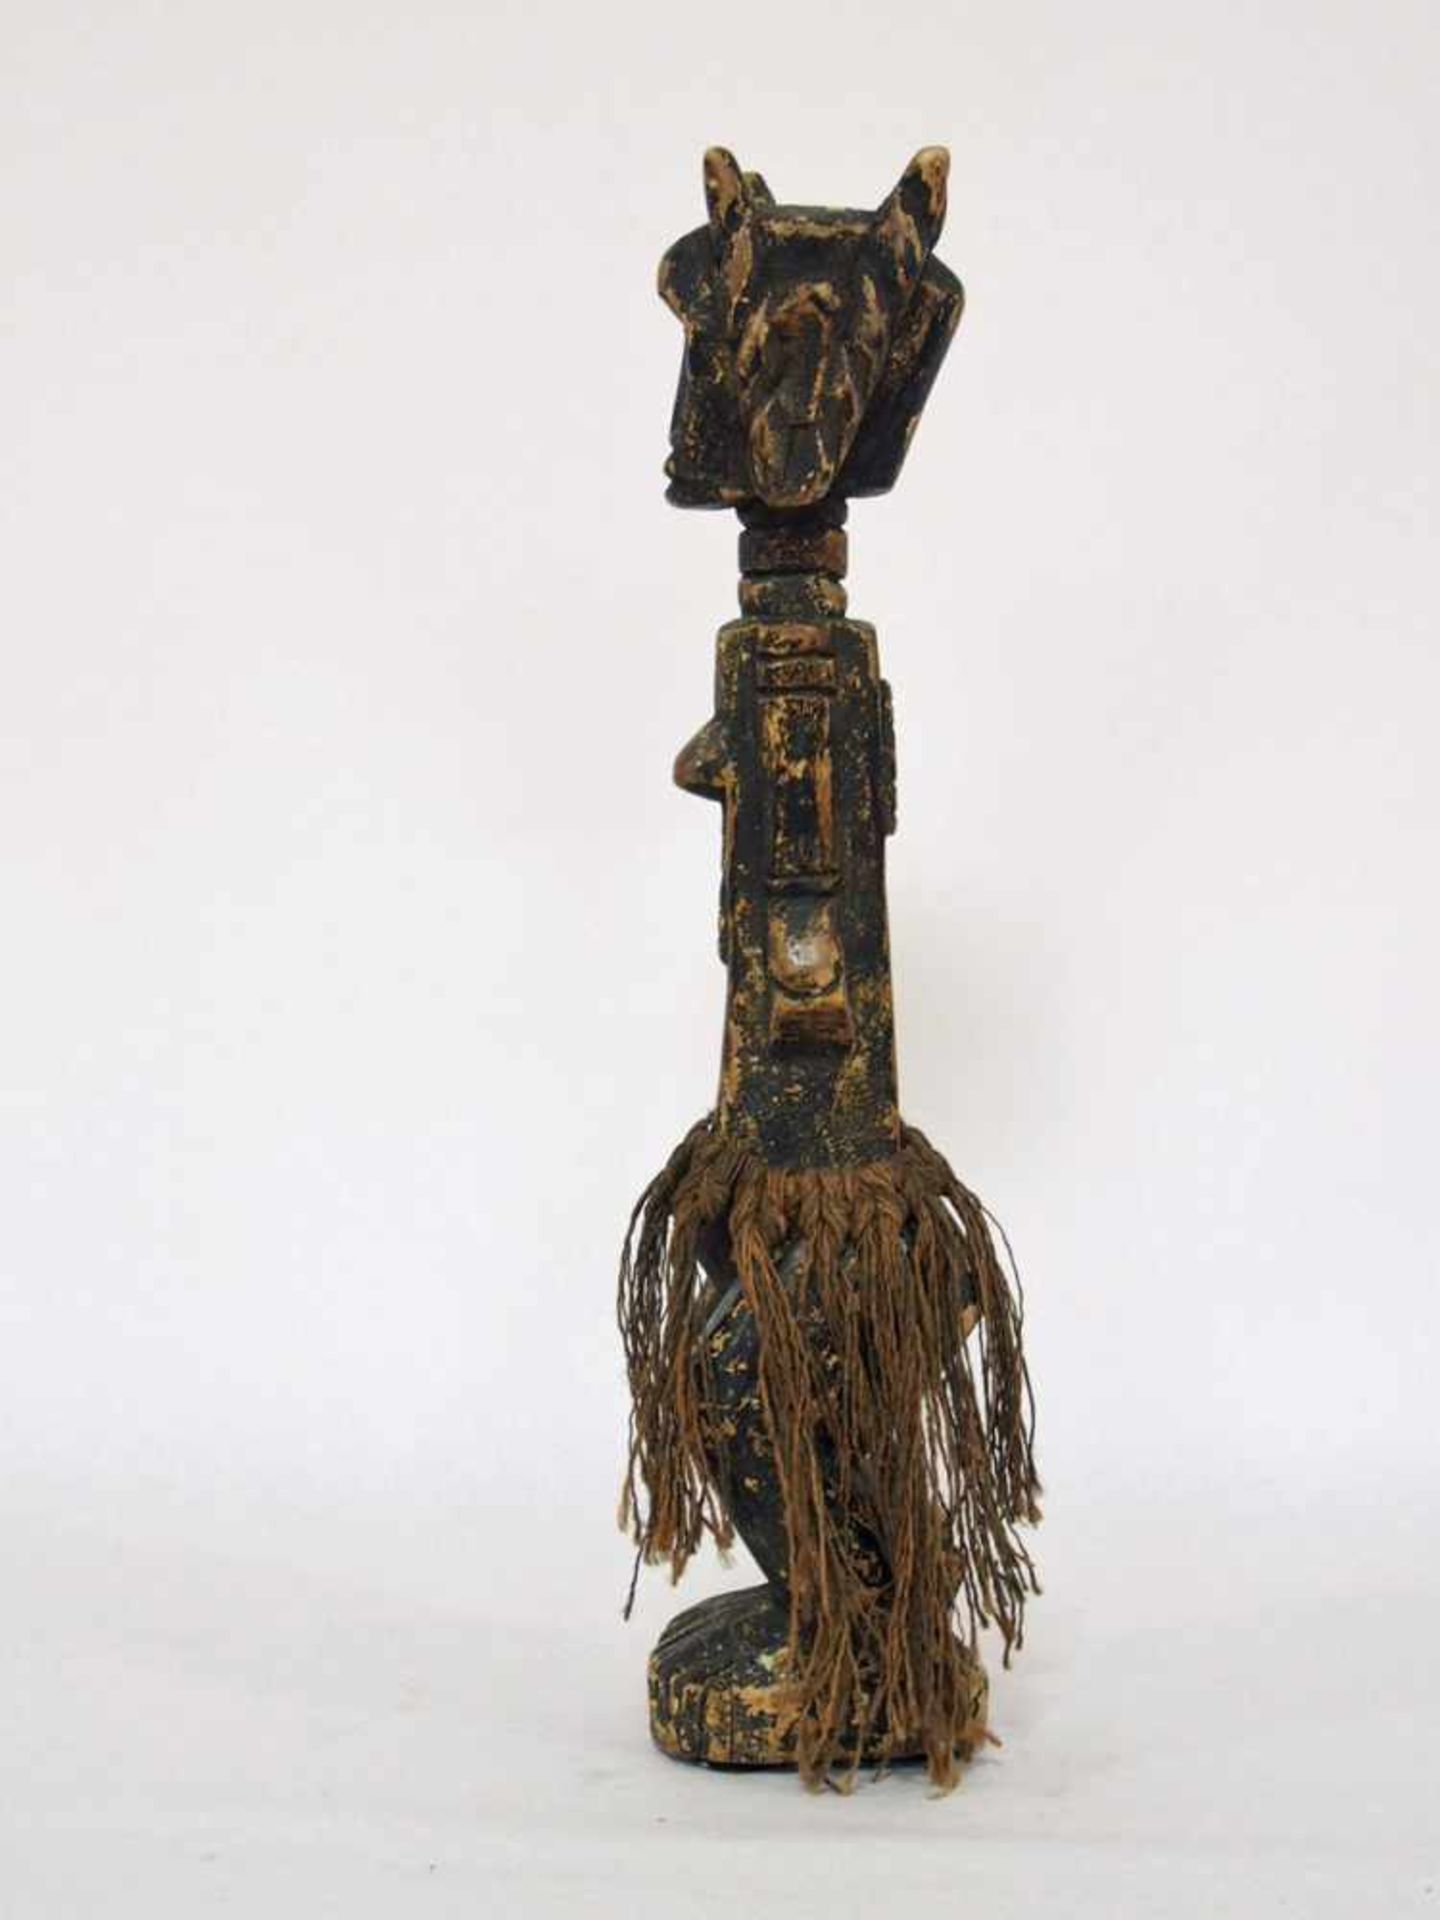 Kleine KultfigurHolz, geschnitzt, scharz gefasst, Hanfbehang, Bena Lulula, Kongo, 1. Hälfte 20. - Bild 2 aus 2